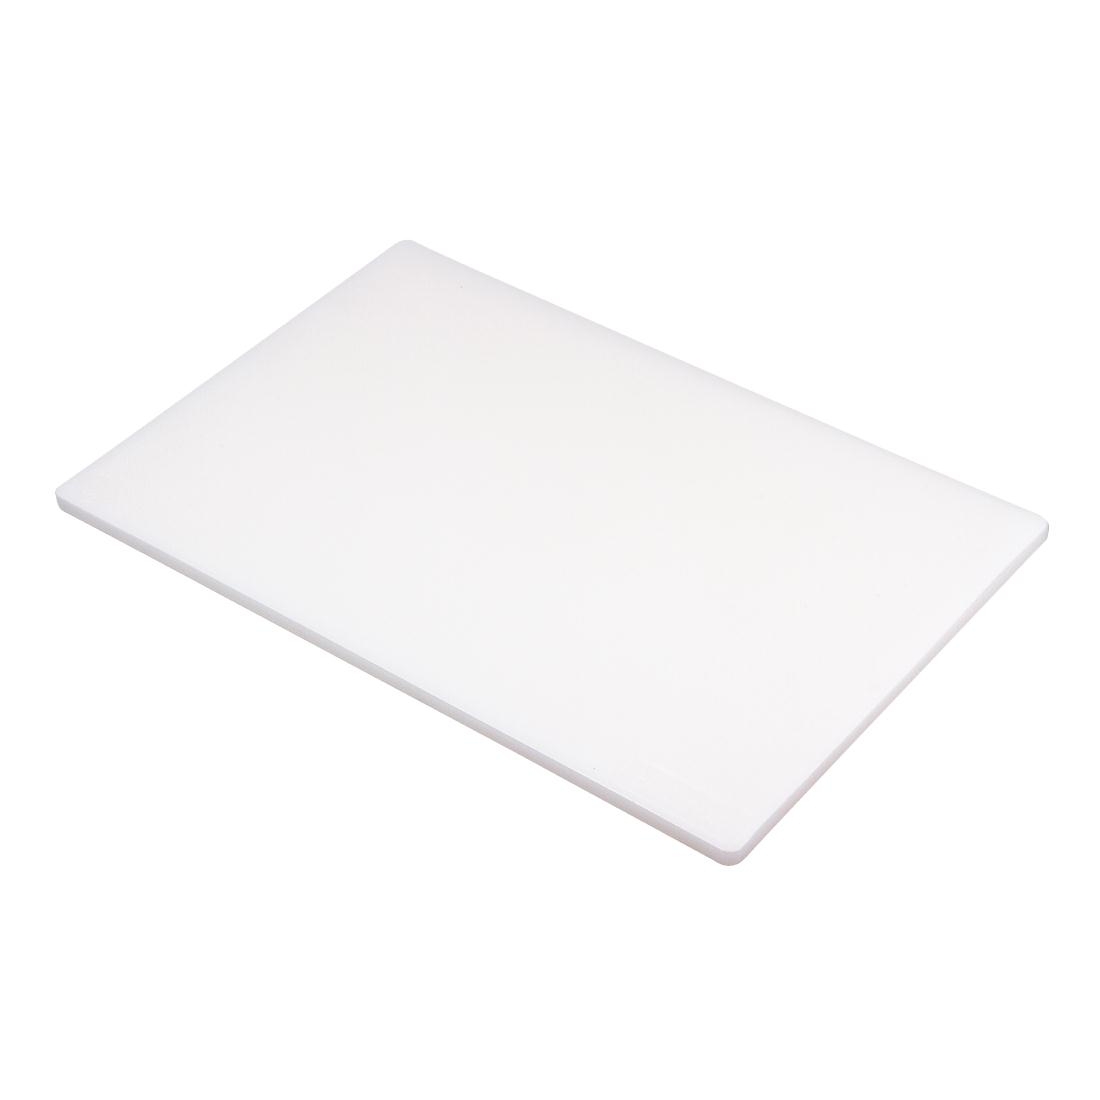 Hygiplas J252 Low Density White Chopping Board